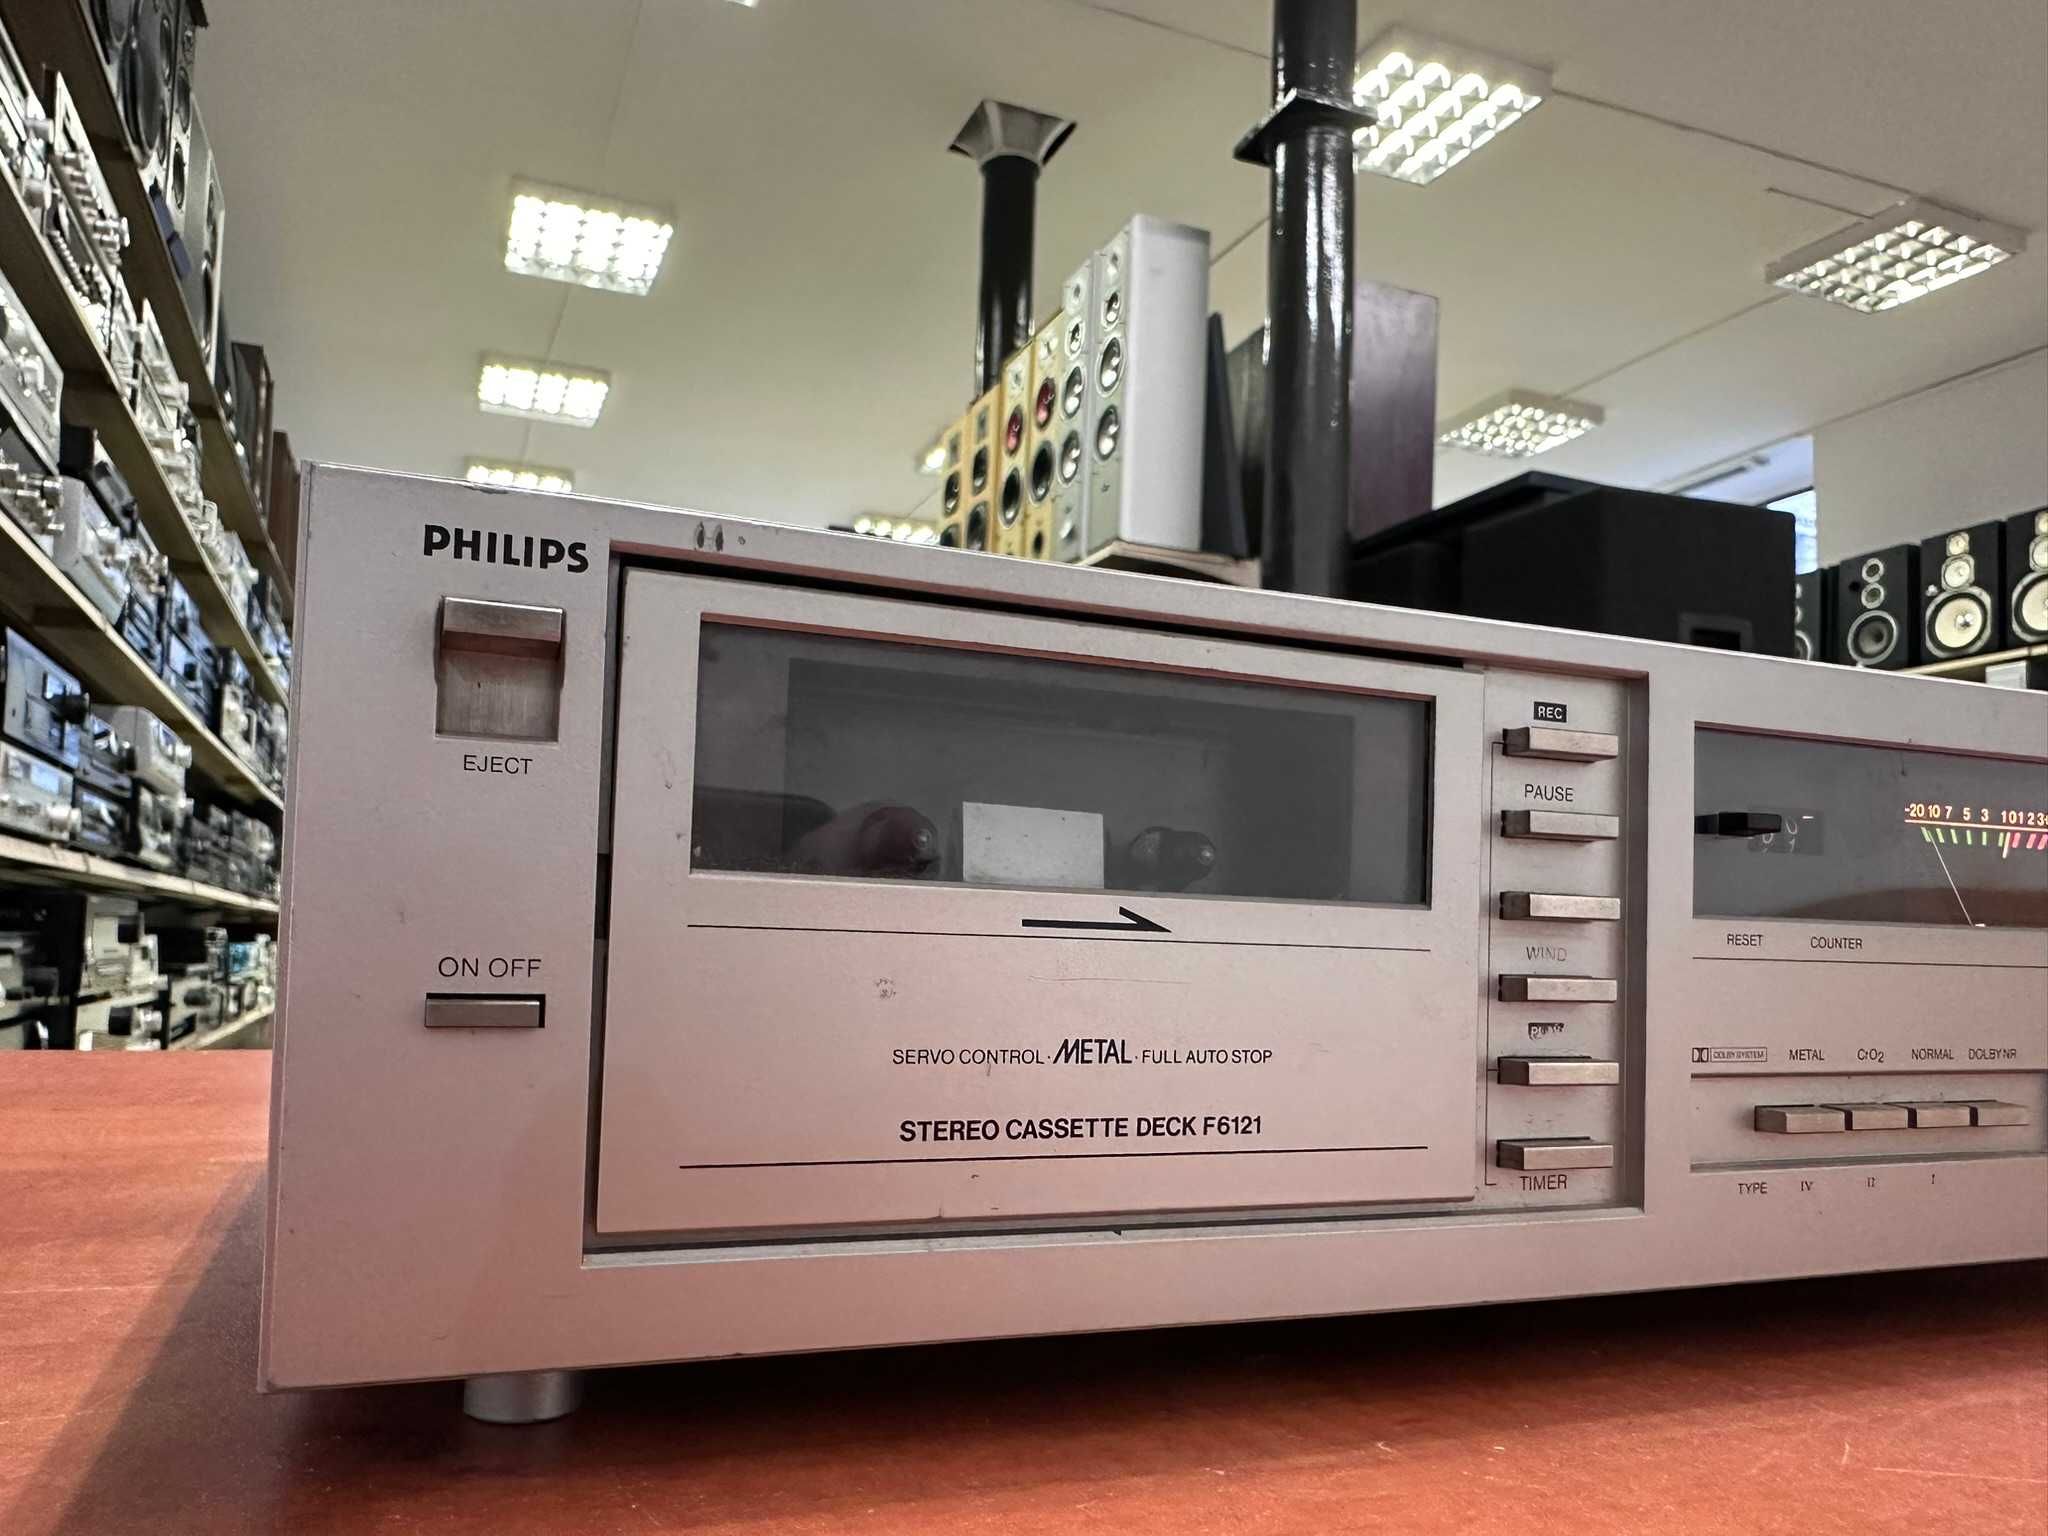 Magnetofon Philips Type F6121